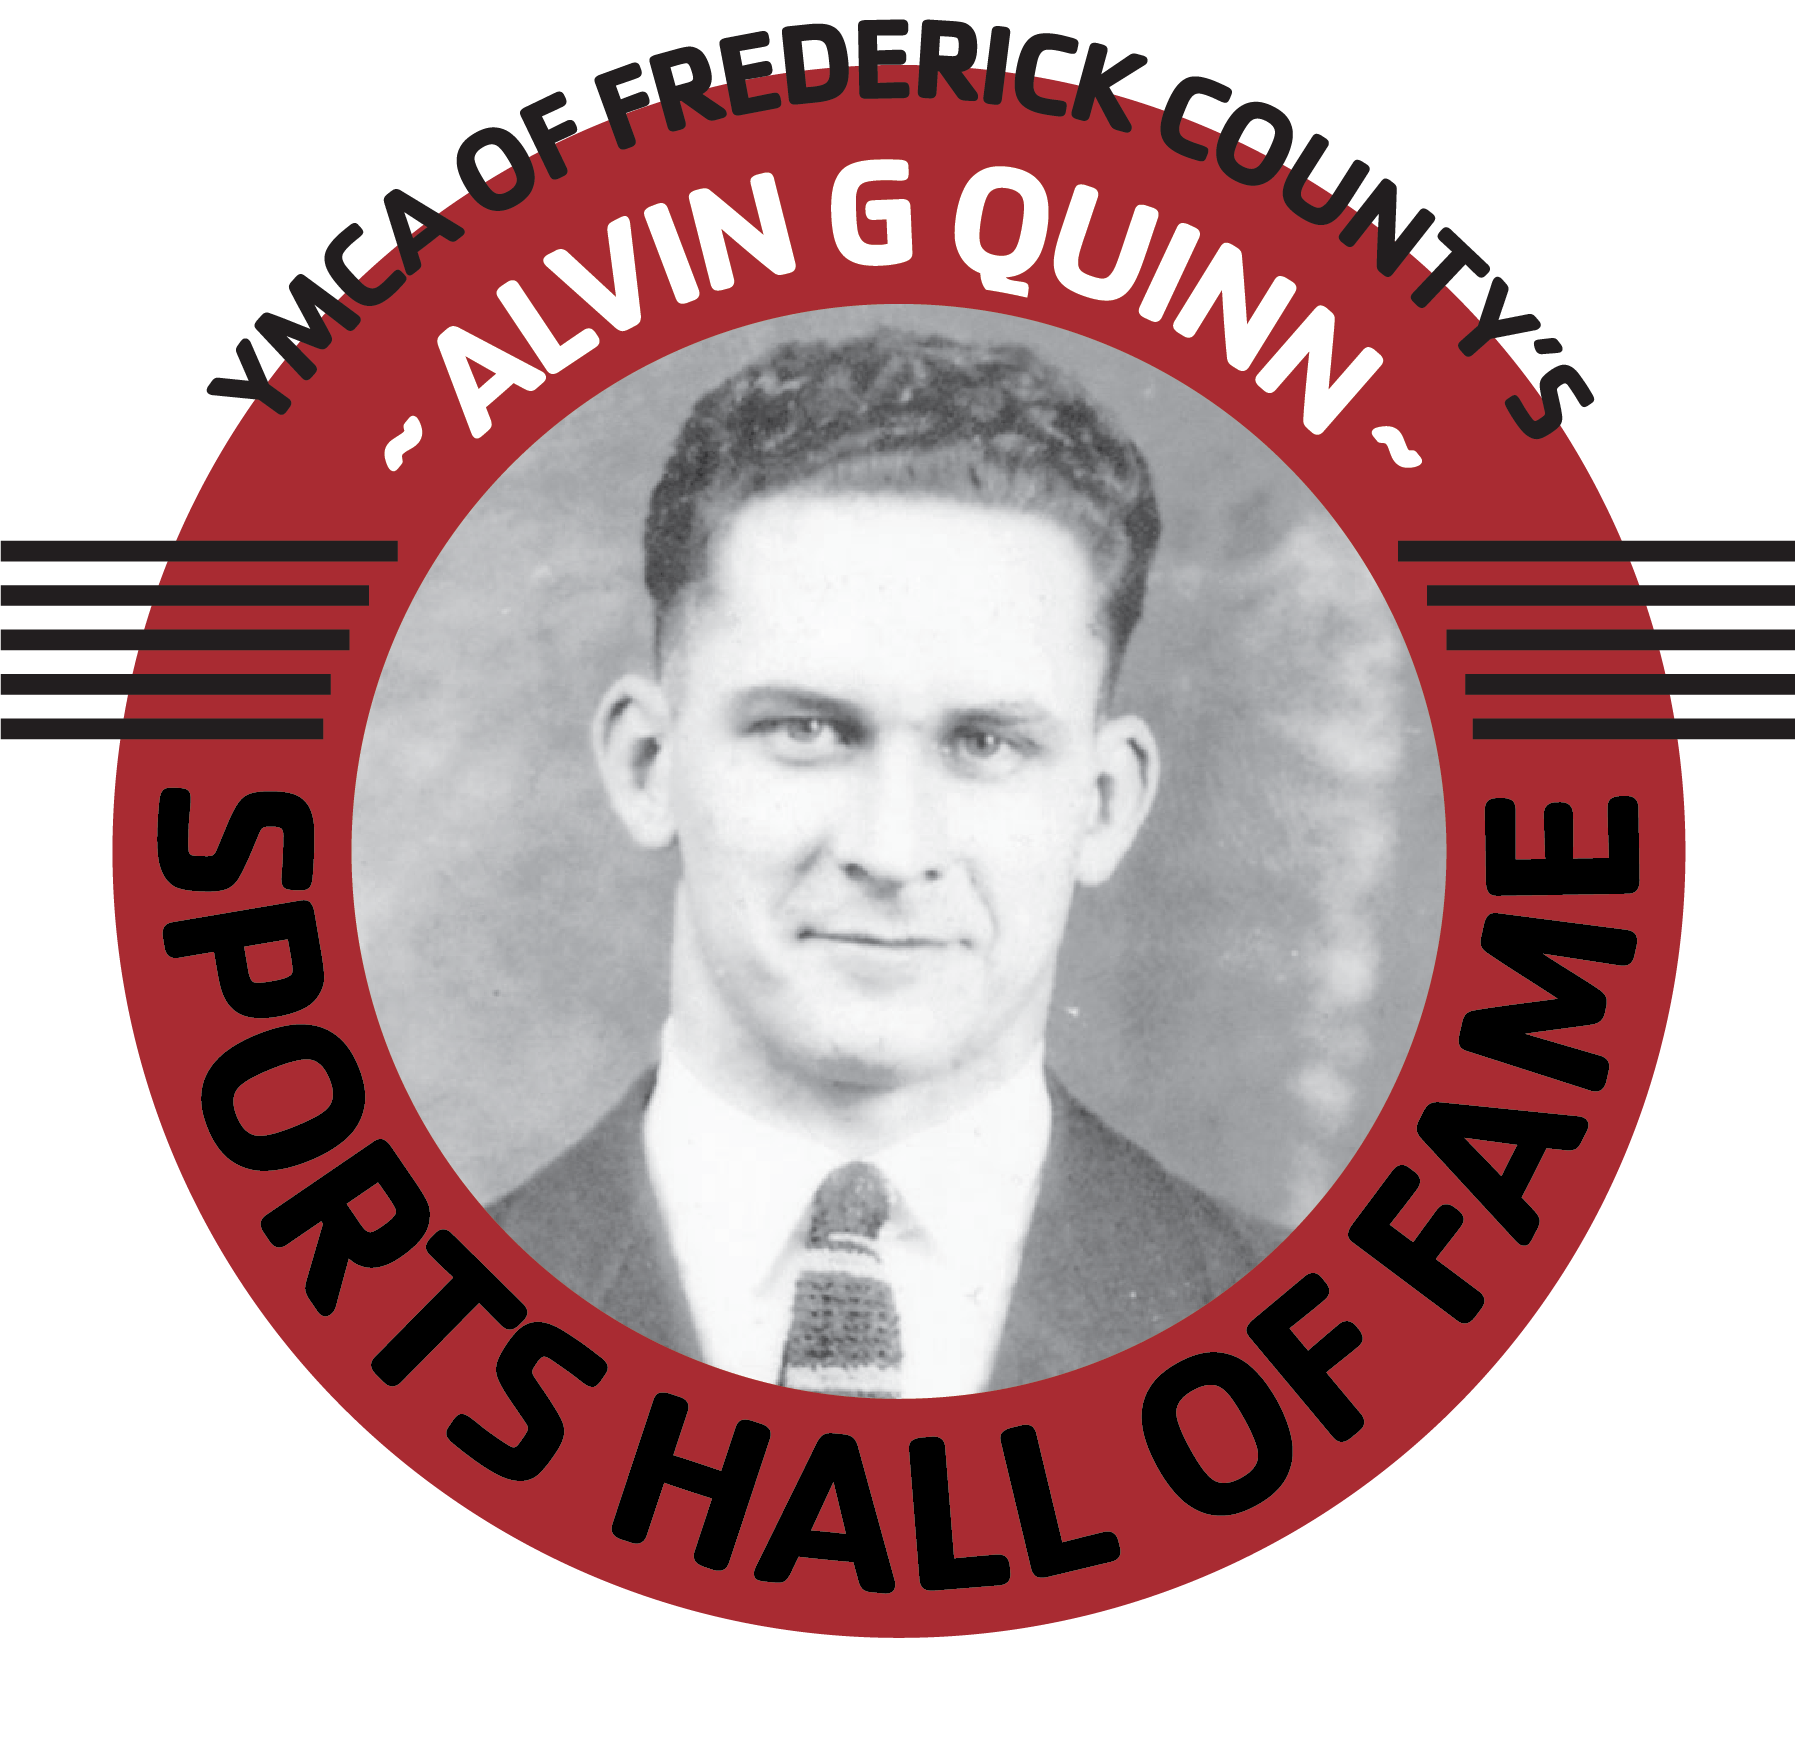 Alvin G. Quinn Sports Hall of Fame